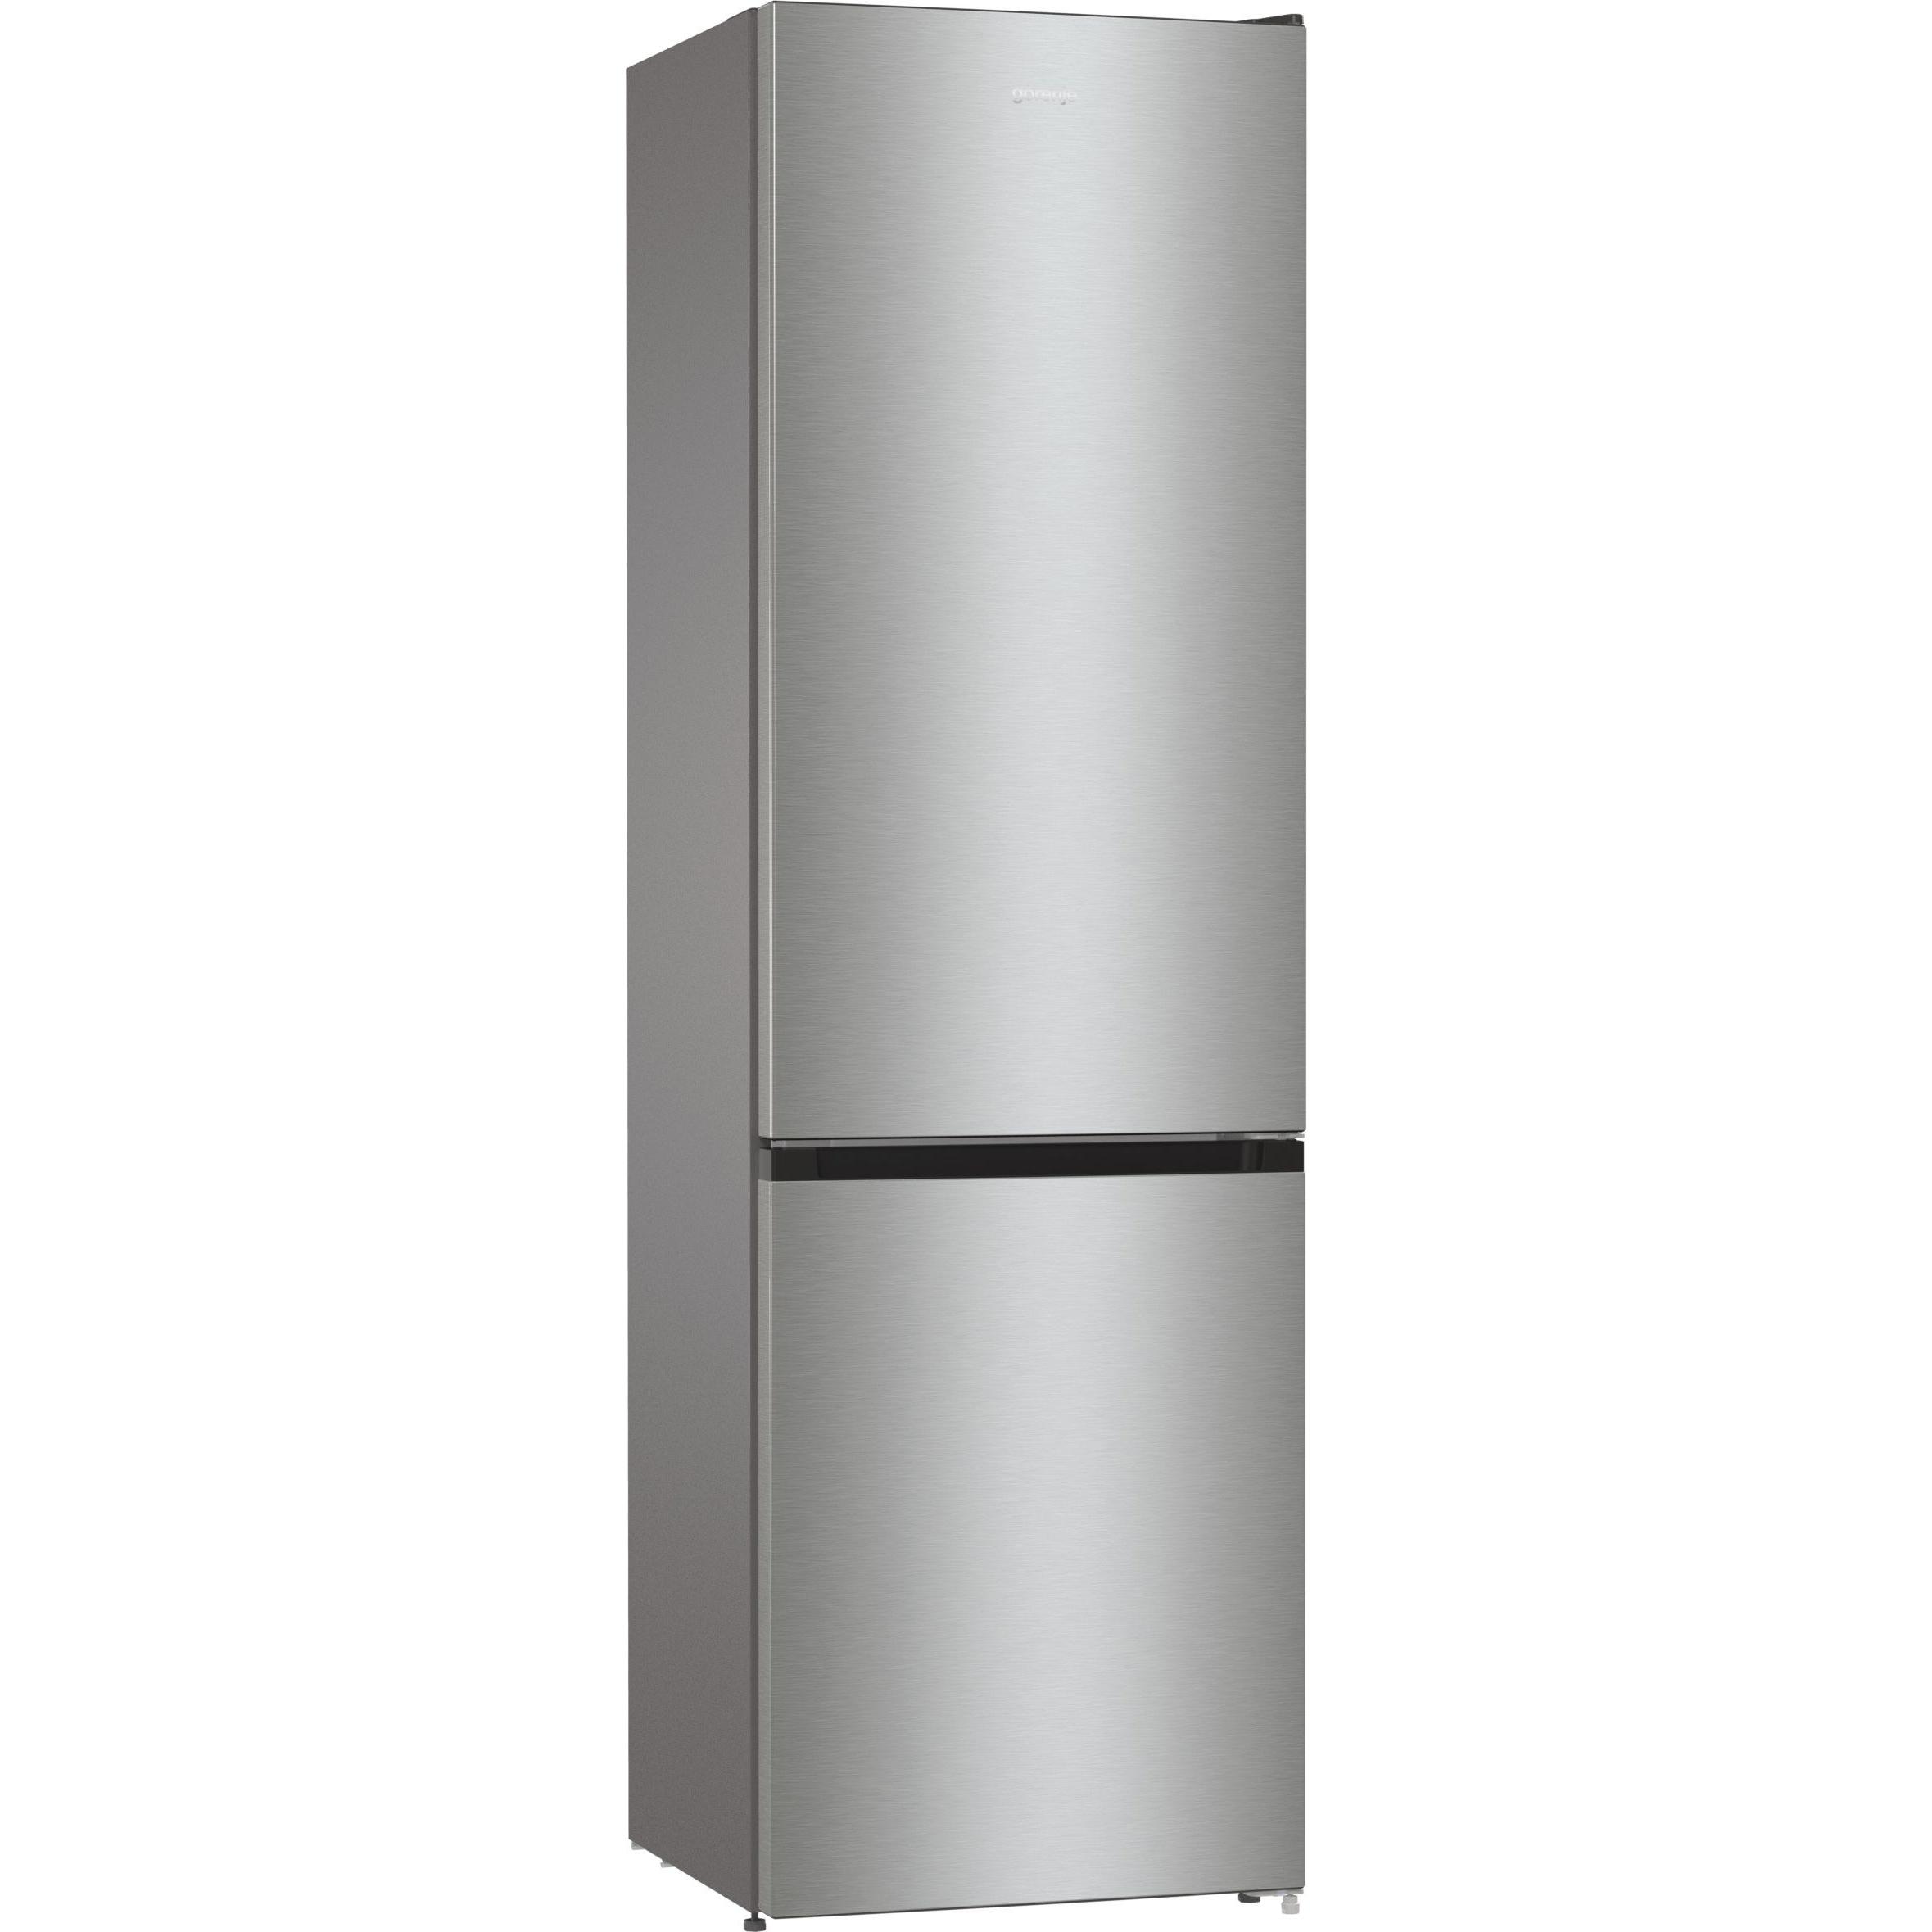 М видео холодильники ноу фрост. Холодильник LG DOORCOOLING+ GC-b569 PMCZ. Bosch kgn76ai22r. Холодильник Bosch kgn76ai22r. Bosch kgn56vi20r.